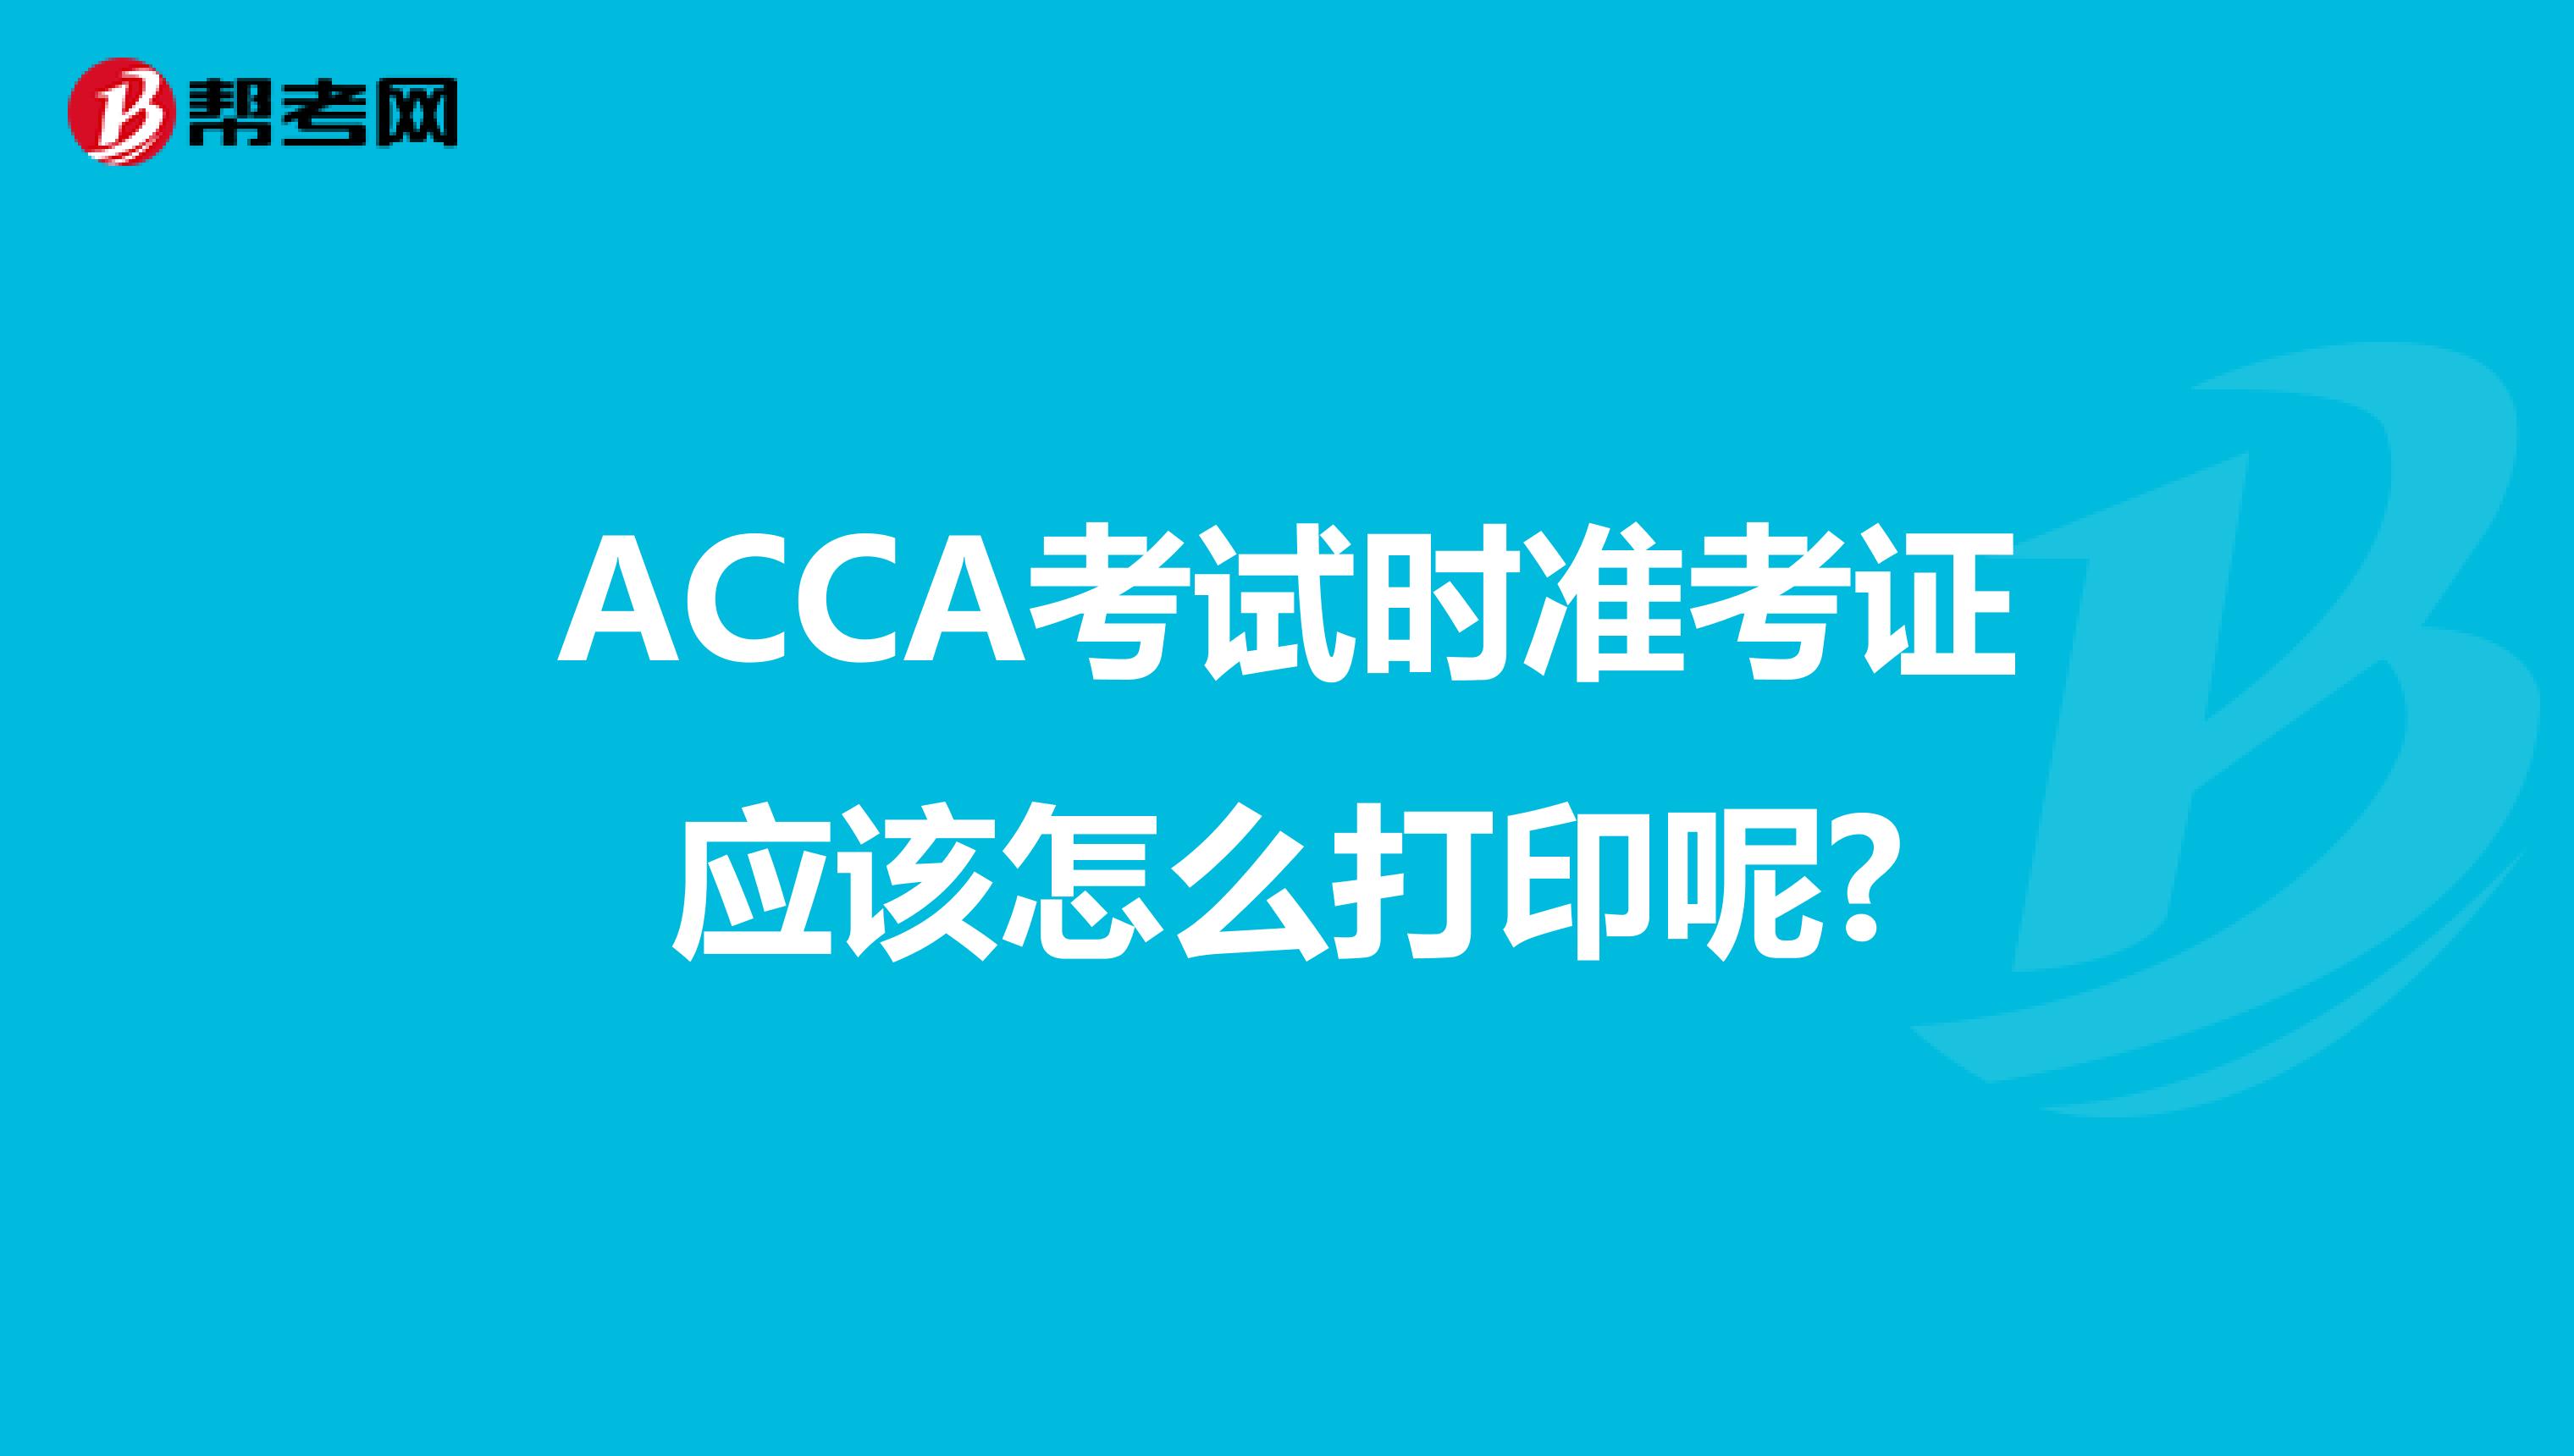 ACCA考试时准考证应该怎么打印呢?